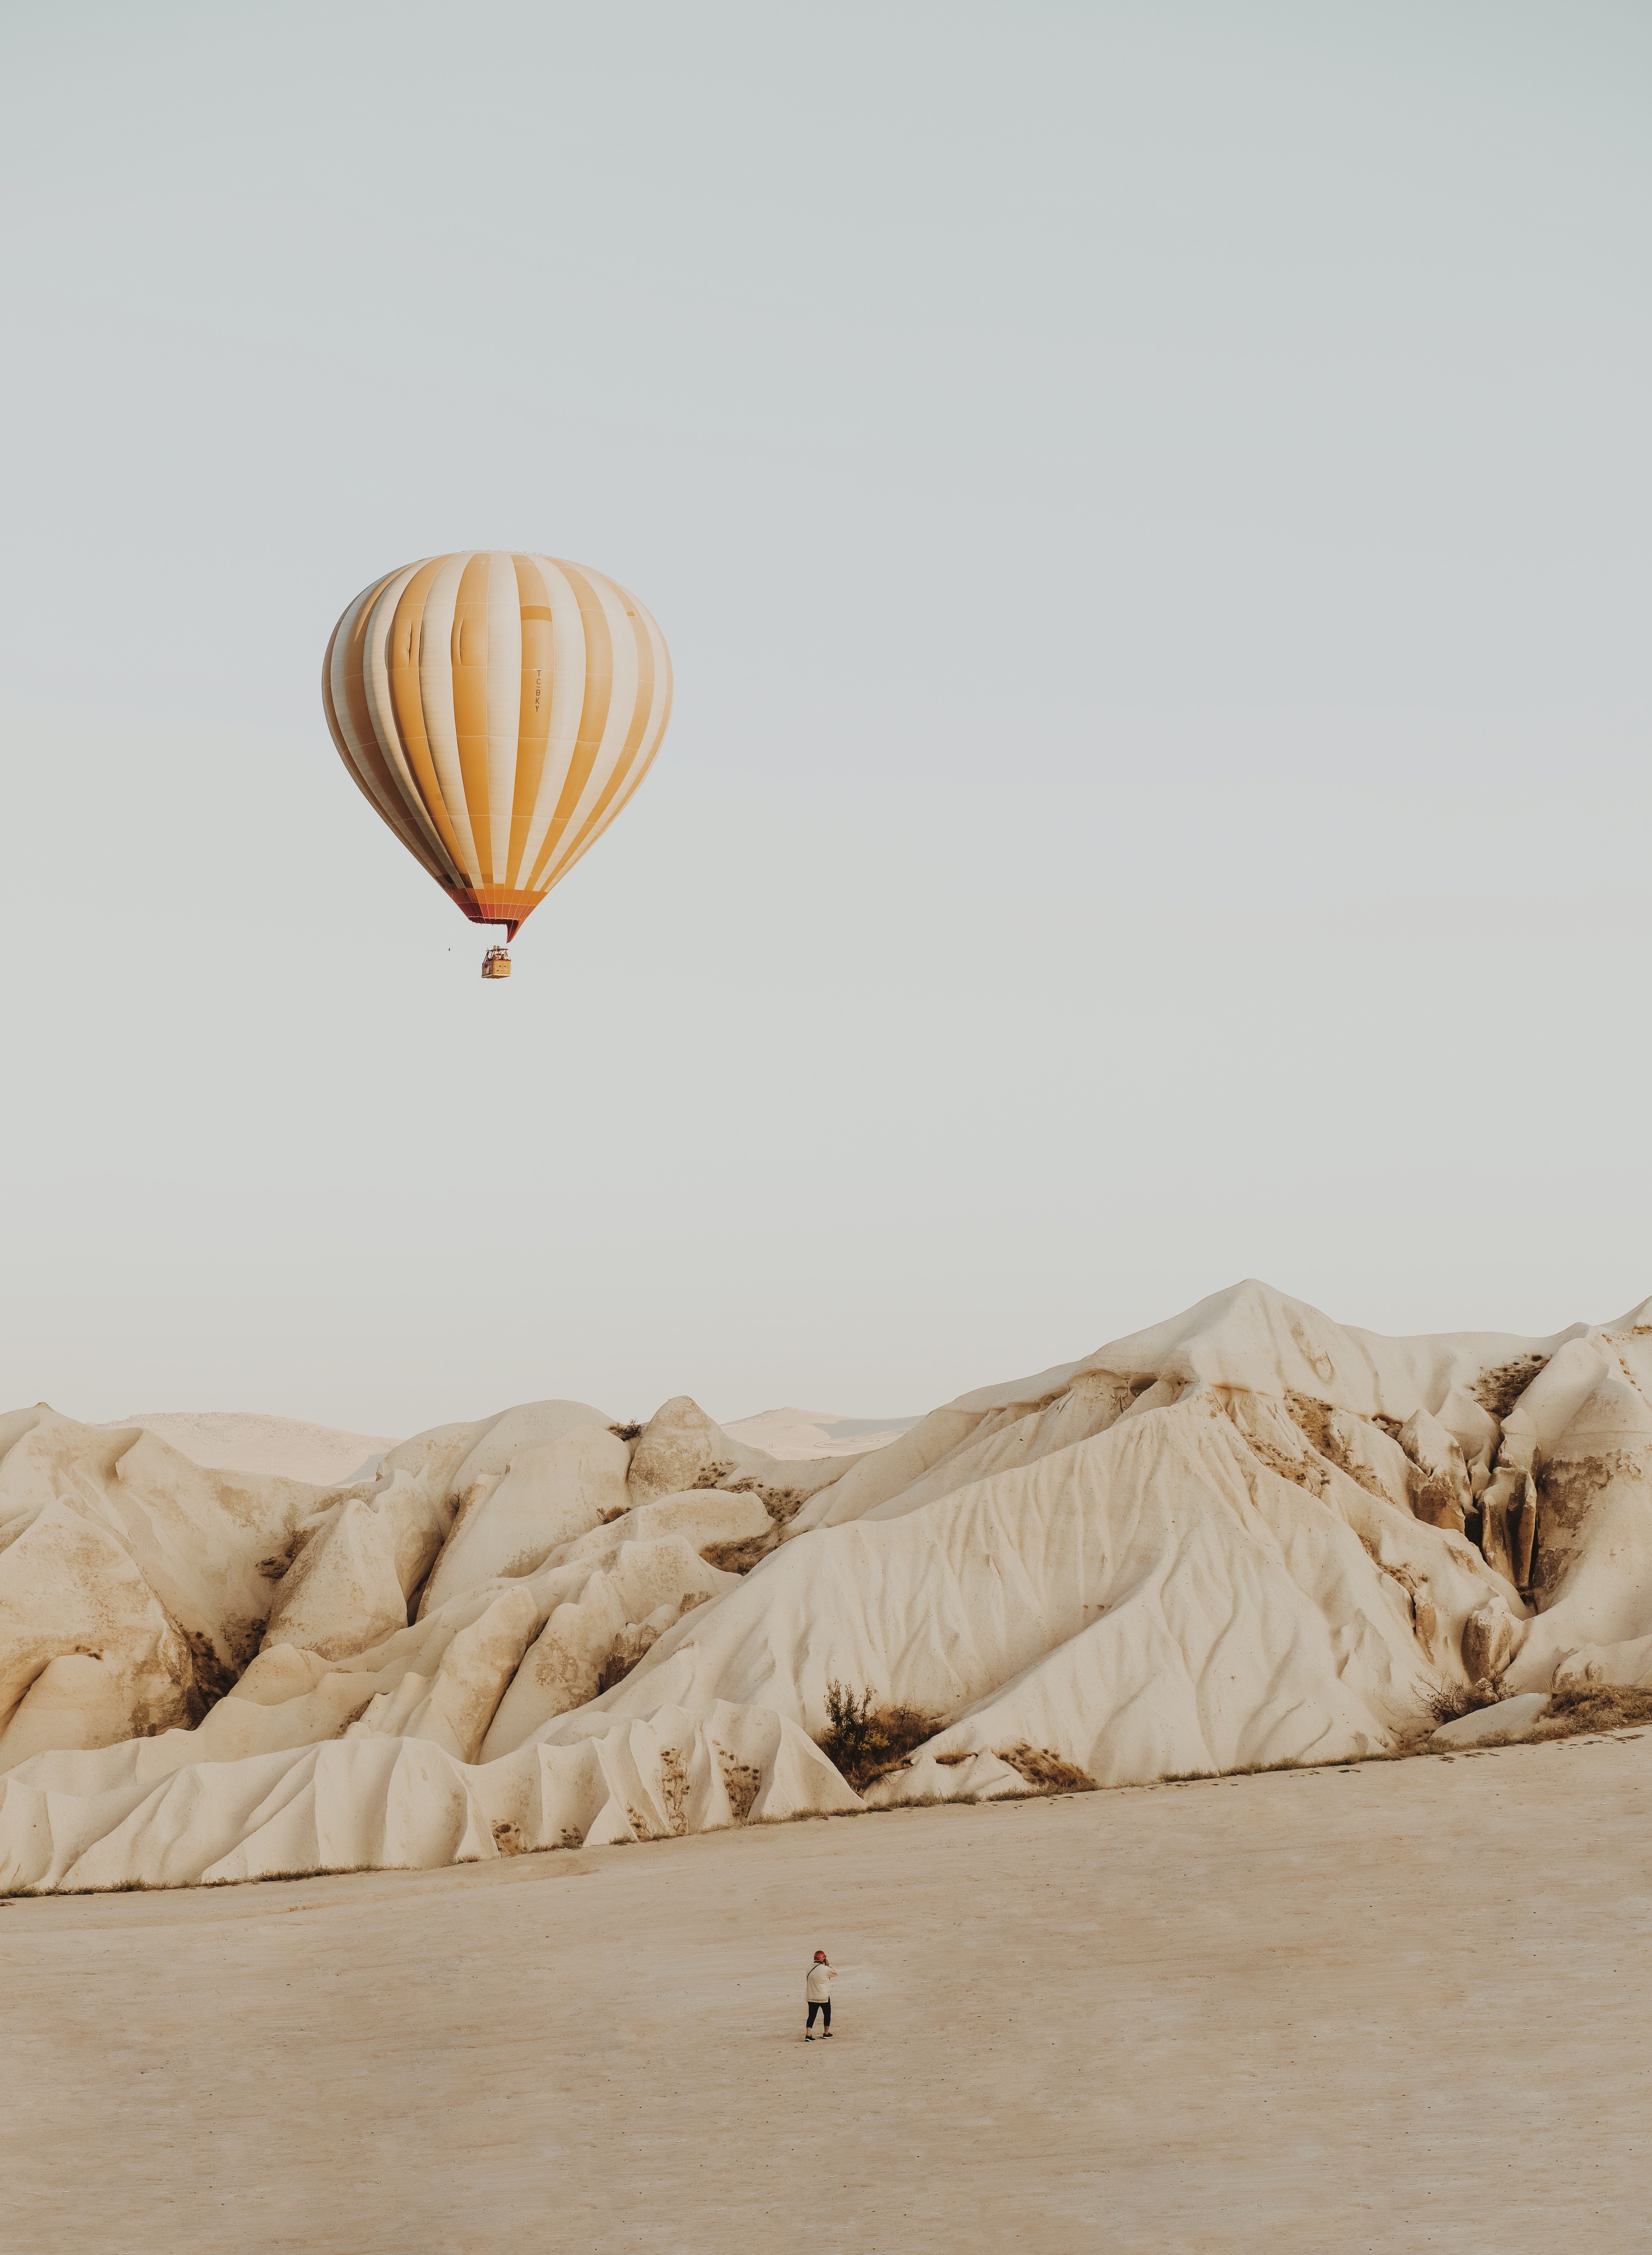 A hot air balloon flying over the desert - Hot air balloons, balloons